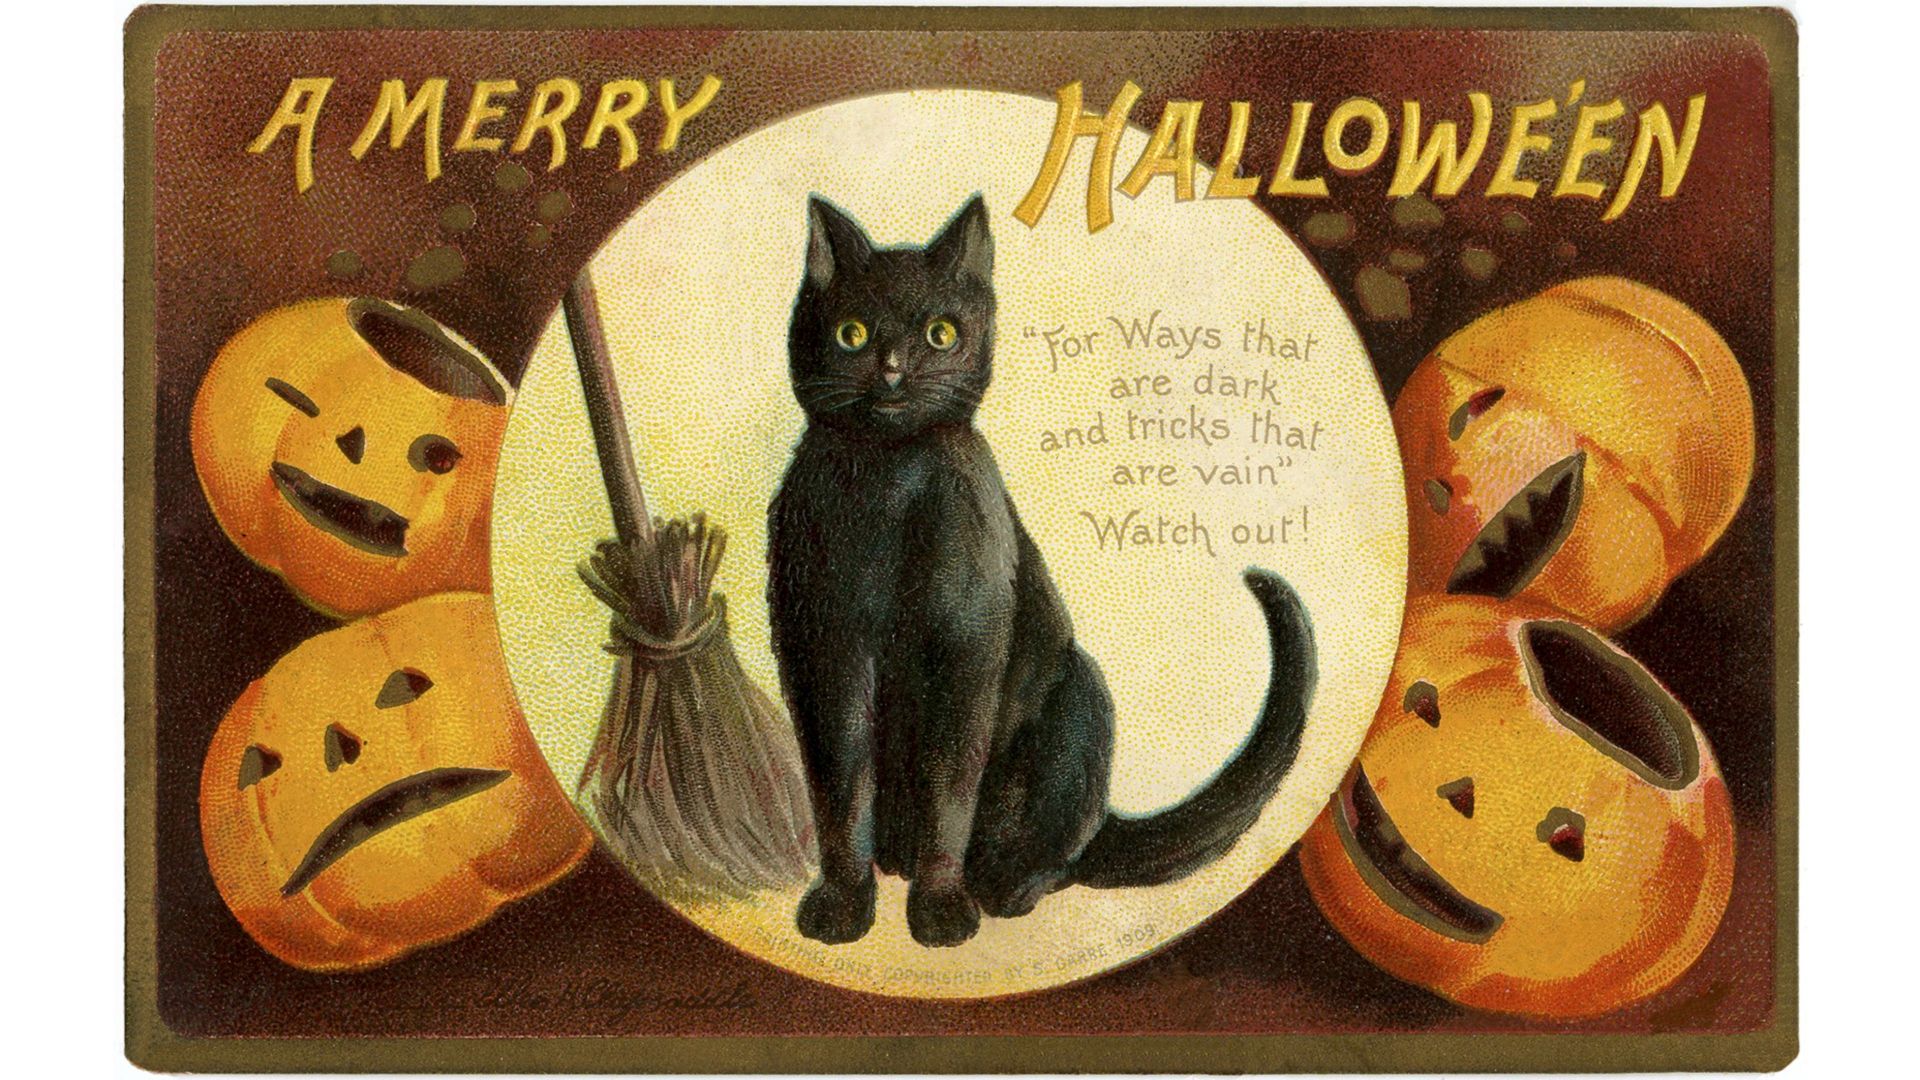 Vintage Halloween wallpaper in 1920x1080 resolution